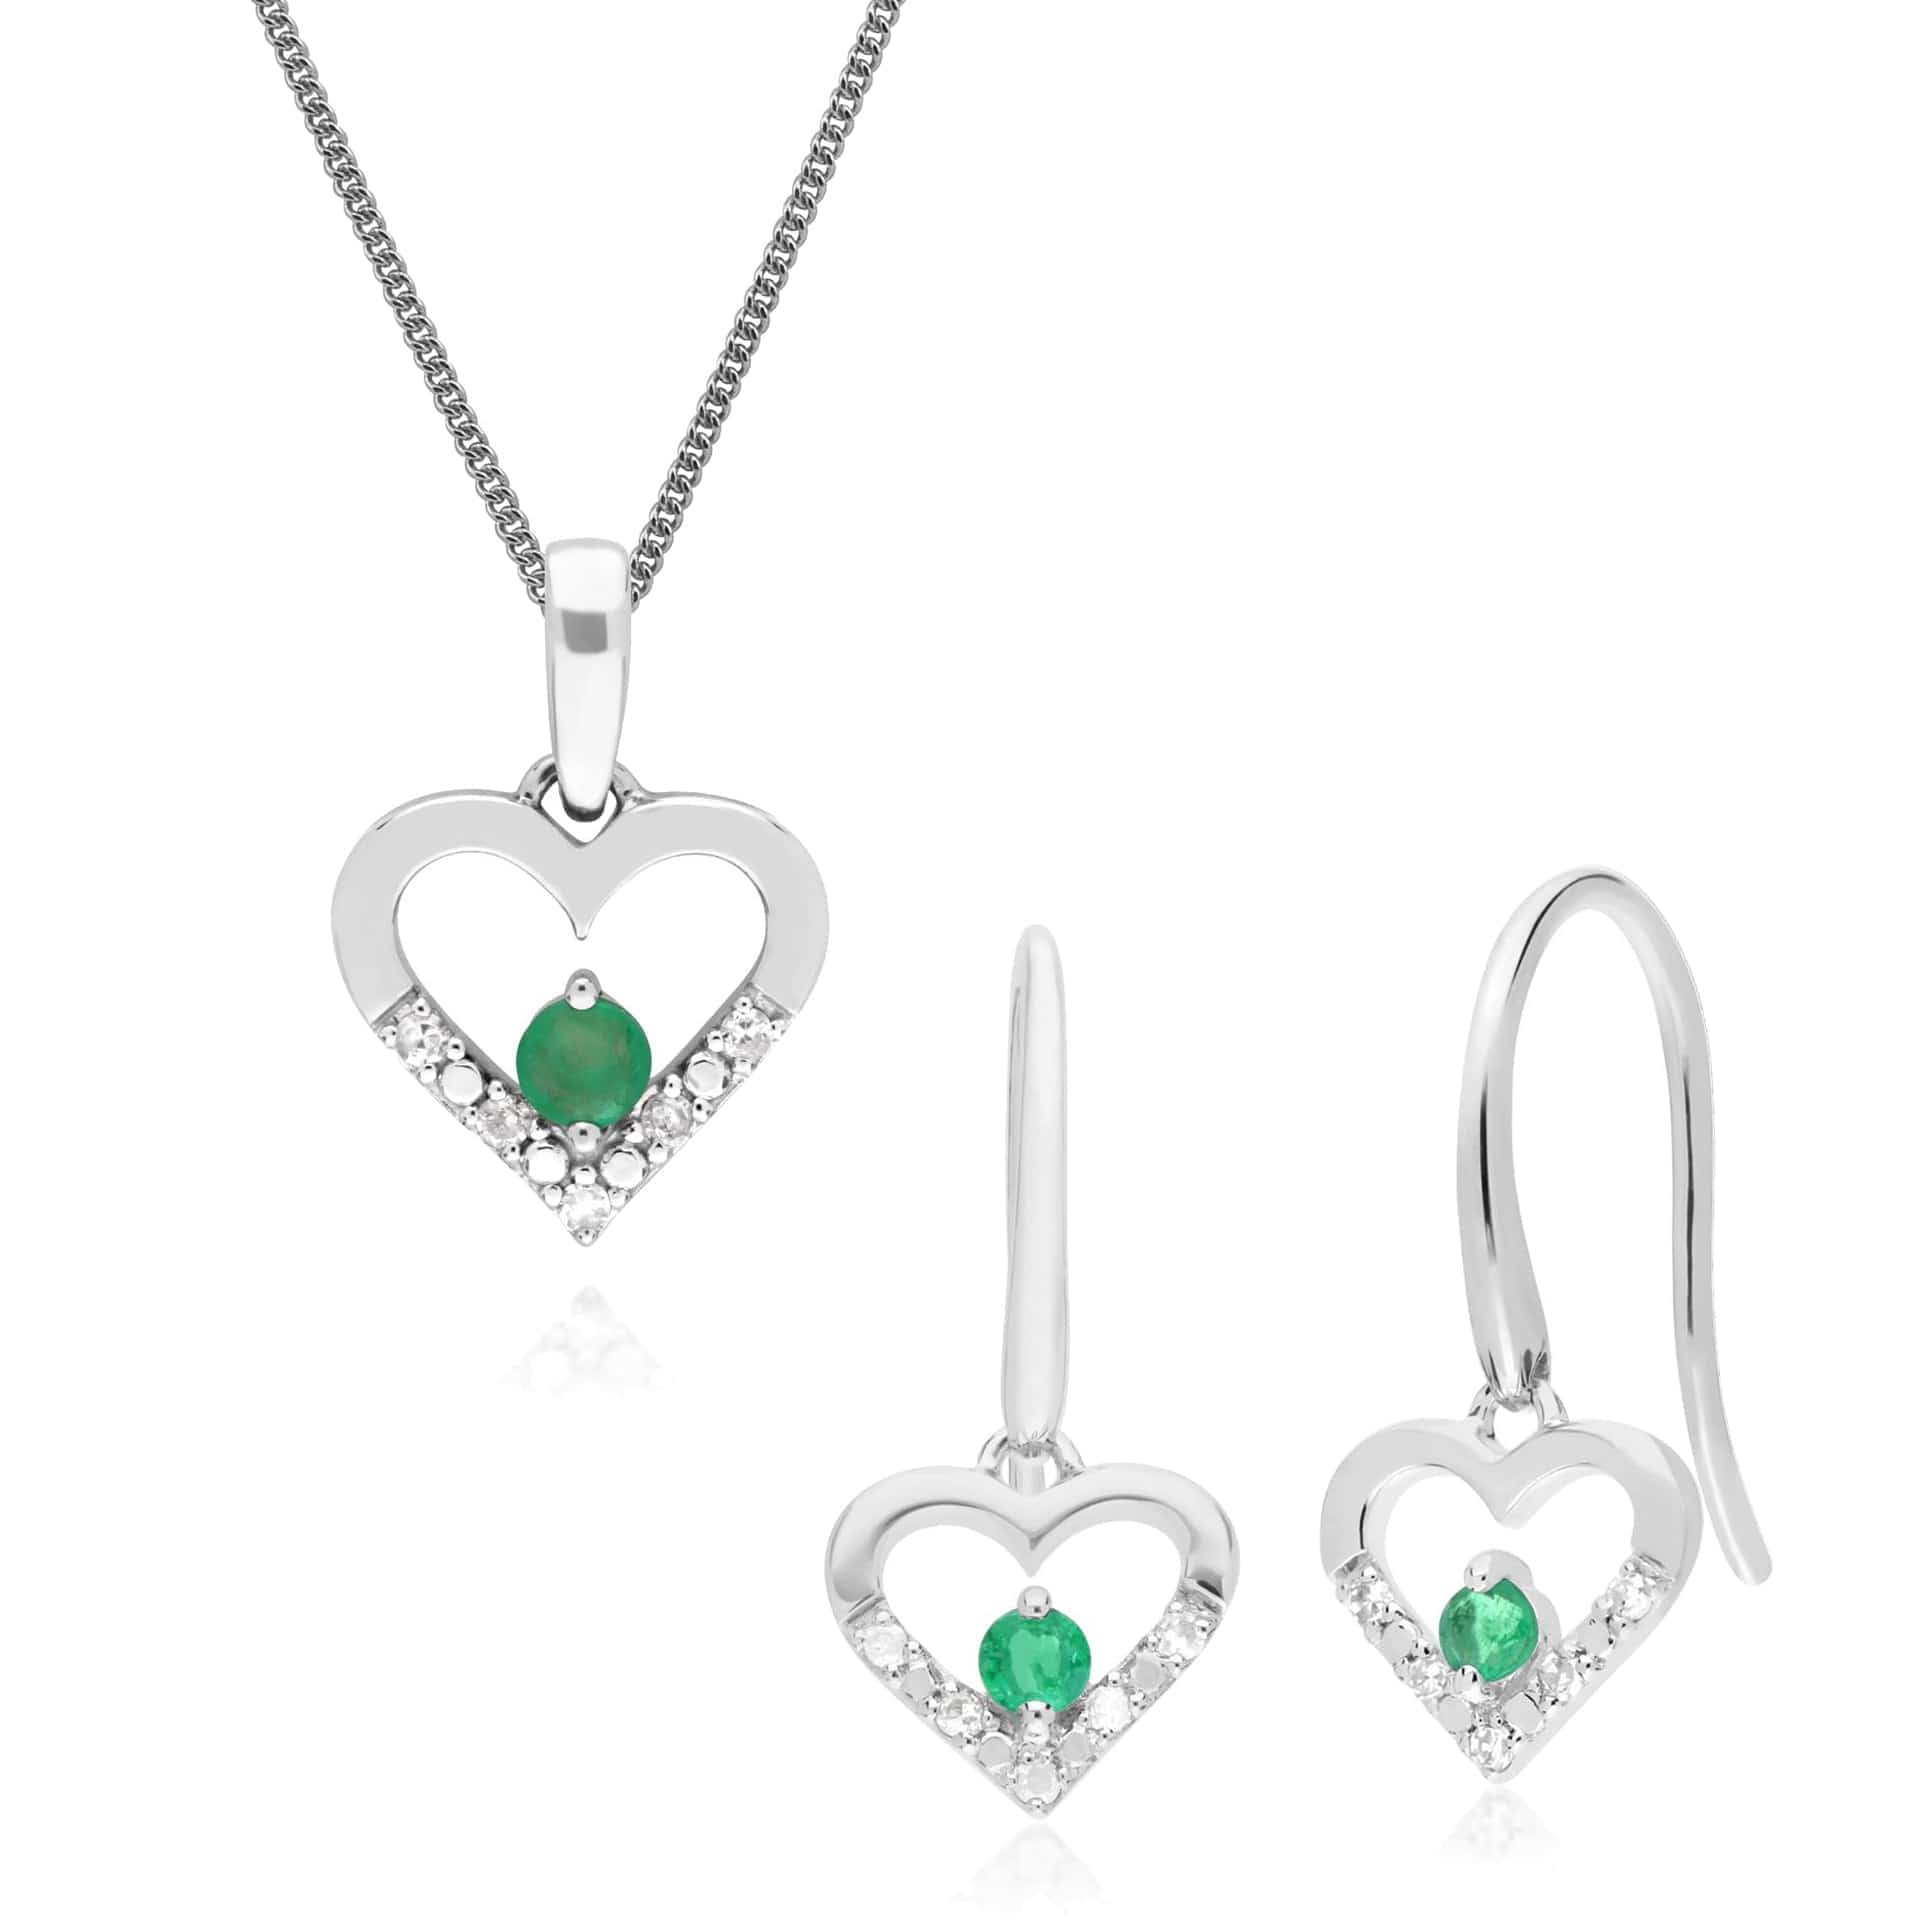 162E0258039-162P0219039 Classic Round Emerald & Diamond Heart Drop Earrings & Pendant Set in 9ct White Gold 1